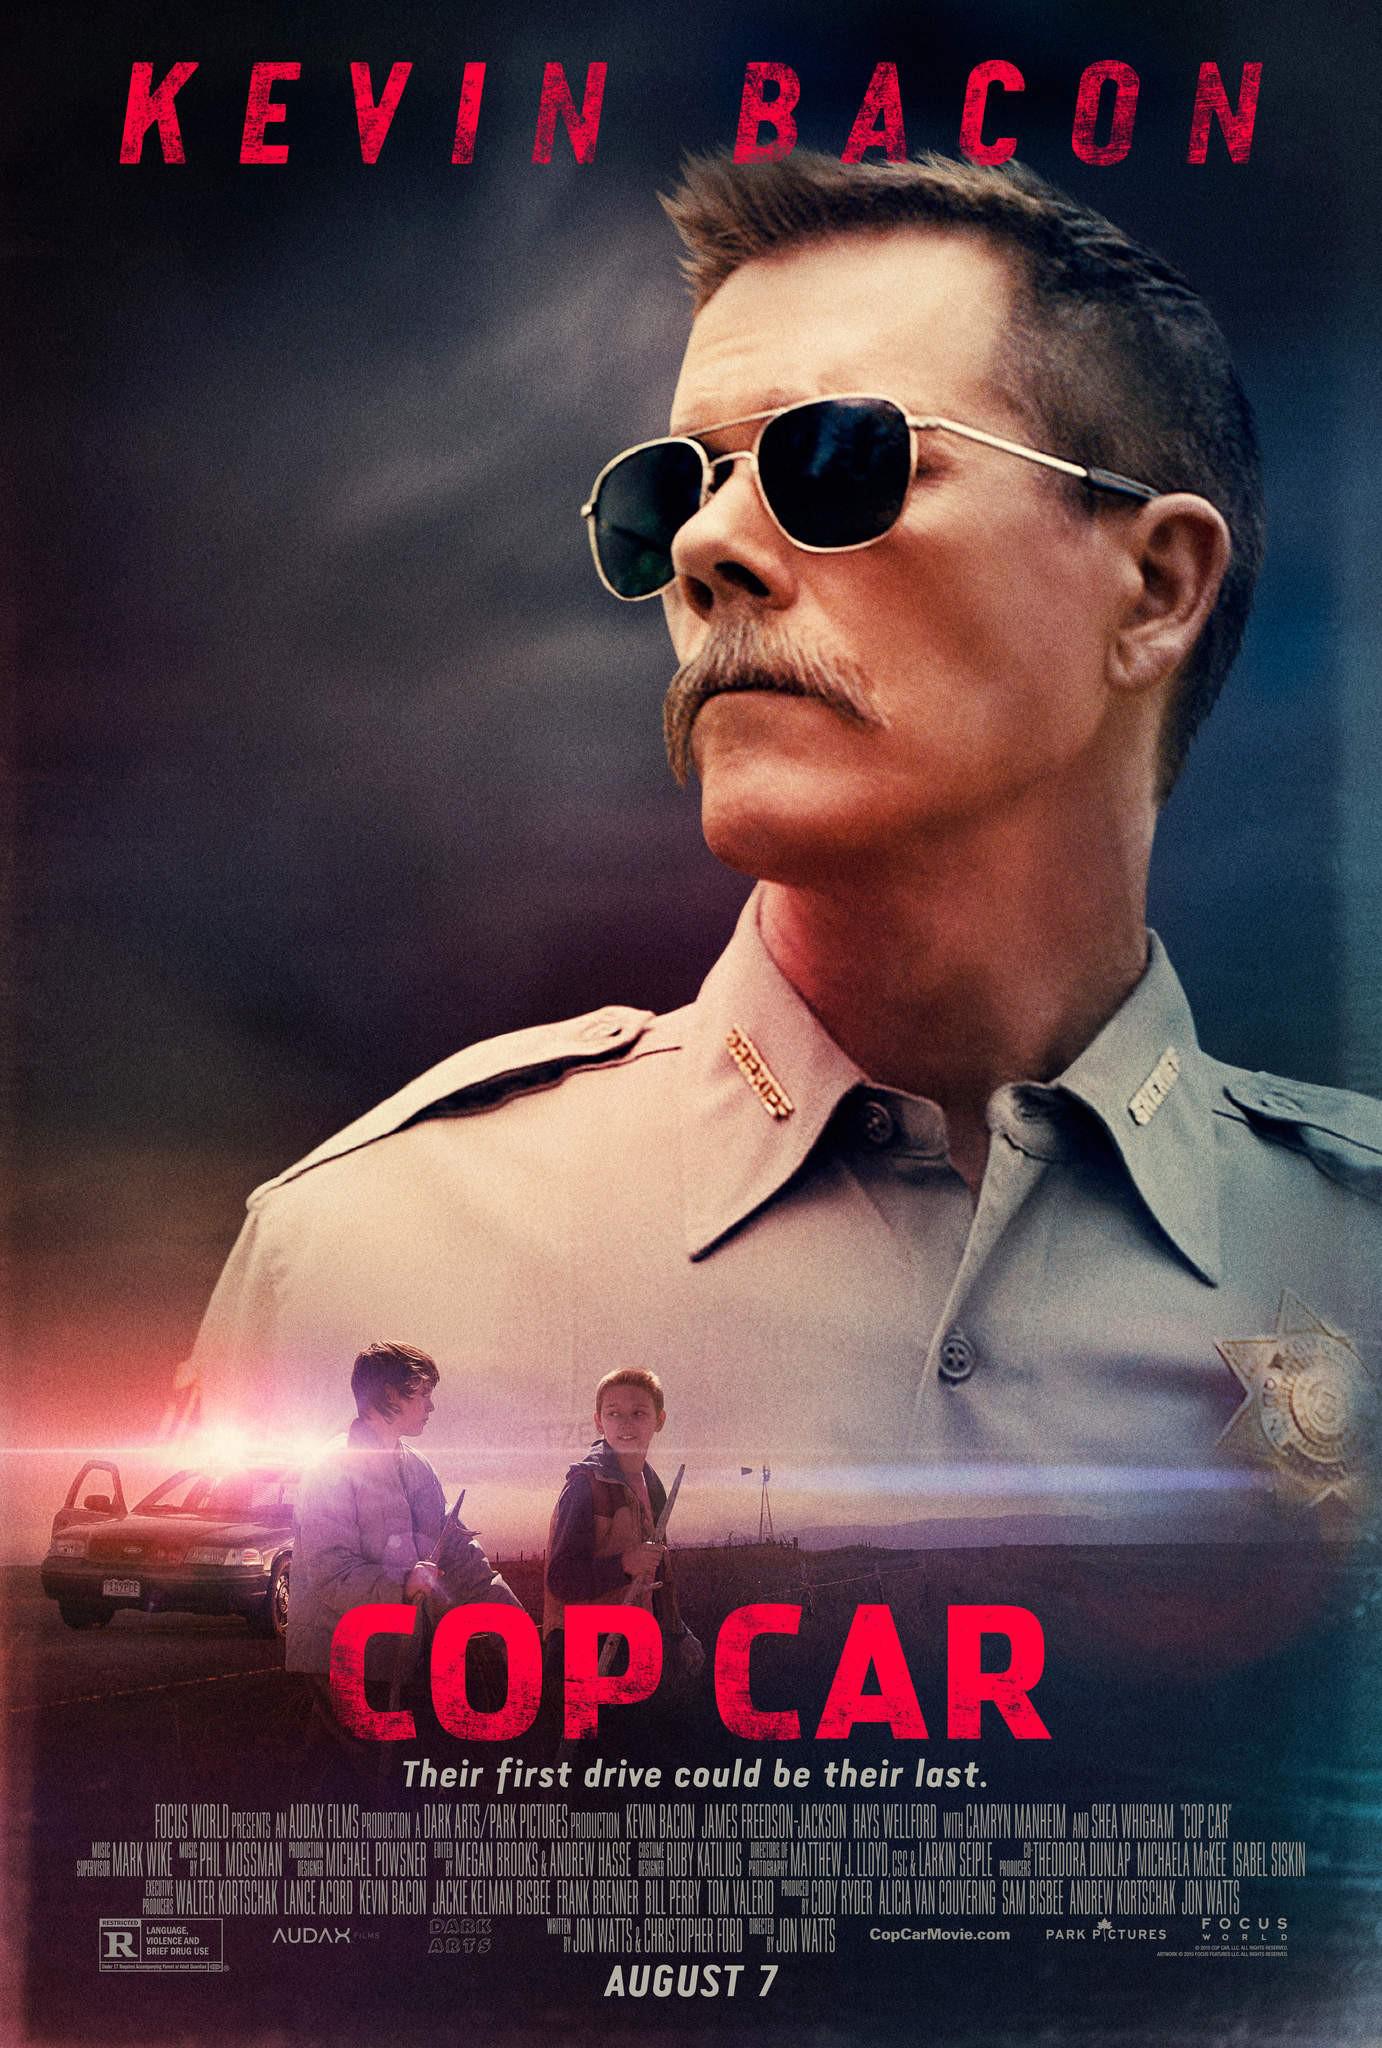 Cop Car Movie Review